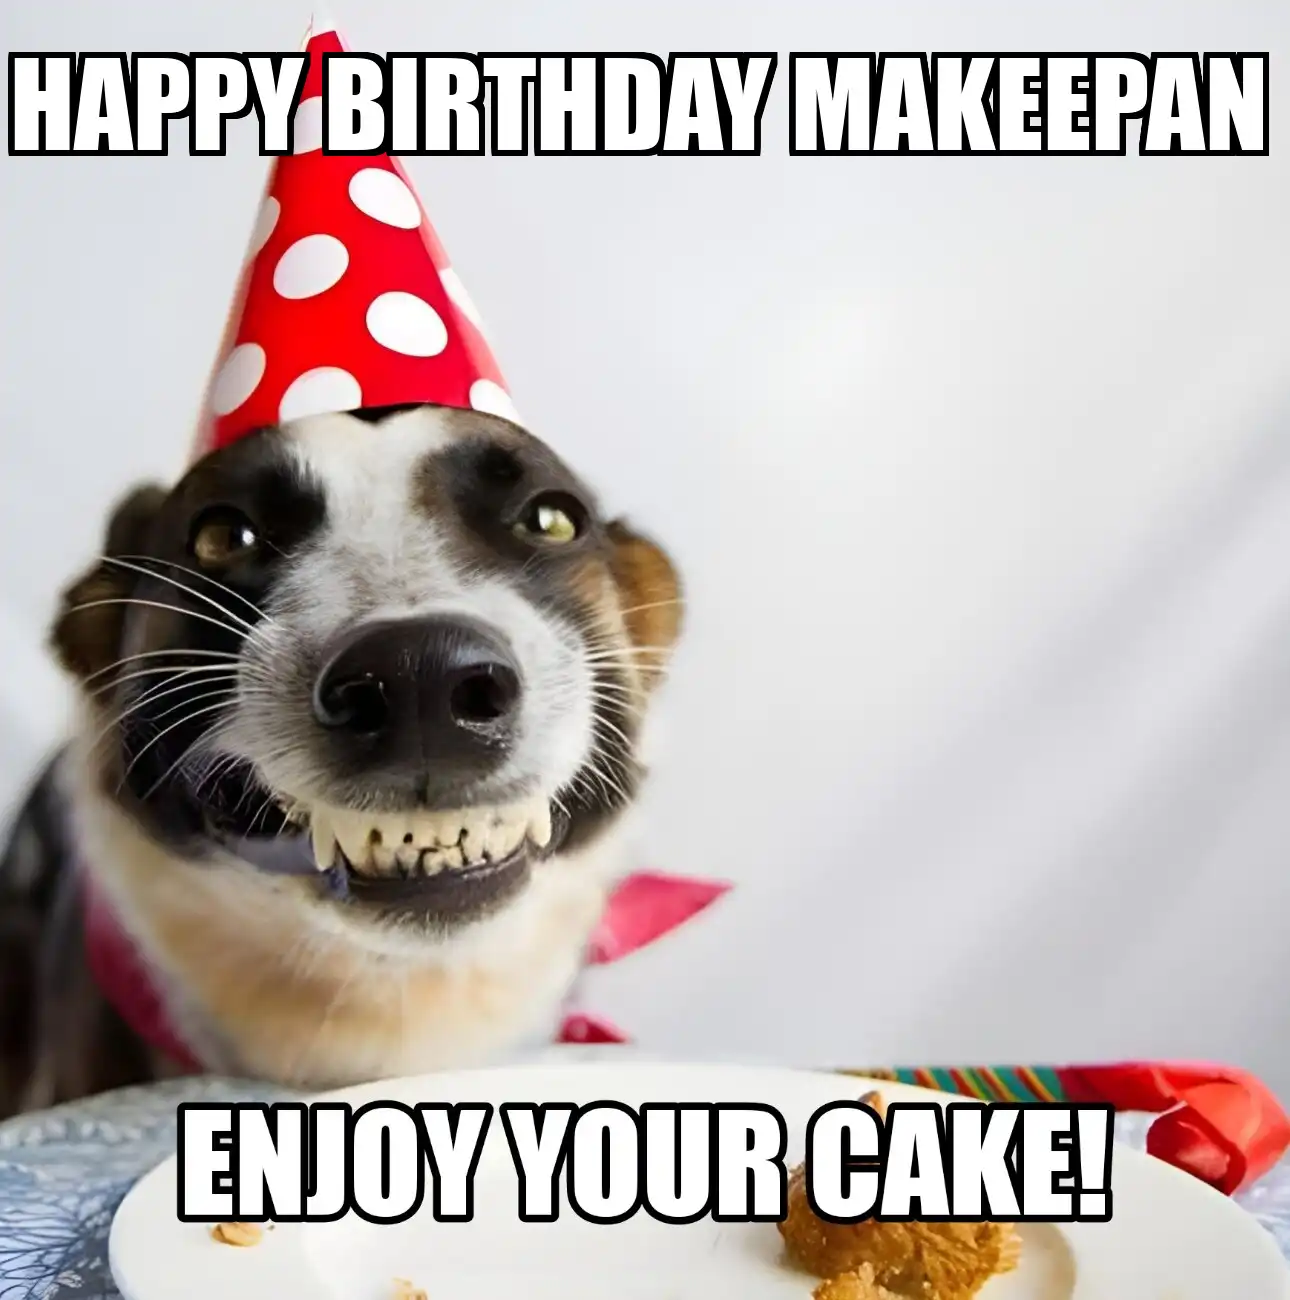 Happy Birthday Makeepan Enjoy Your Cake Dog Meme